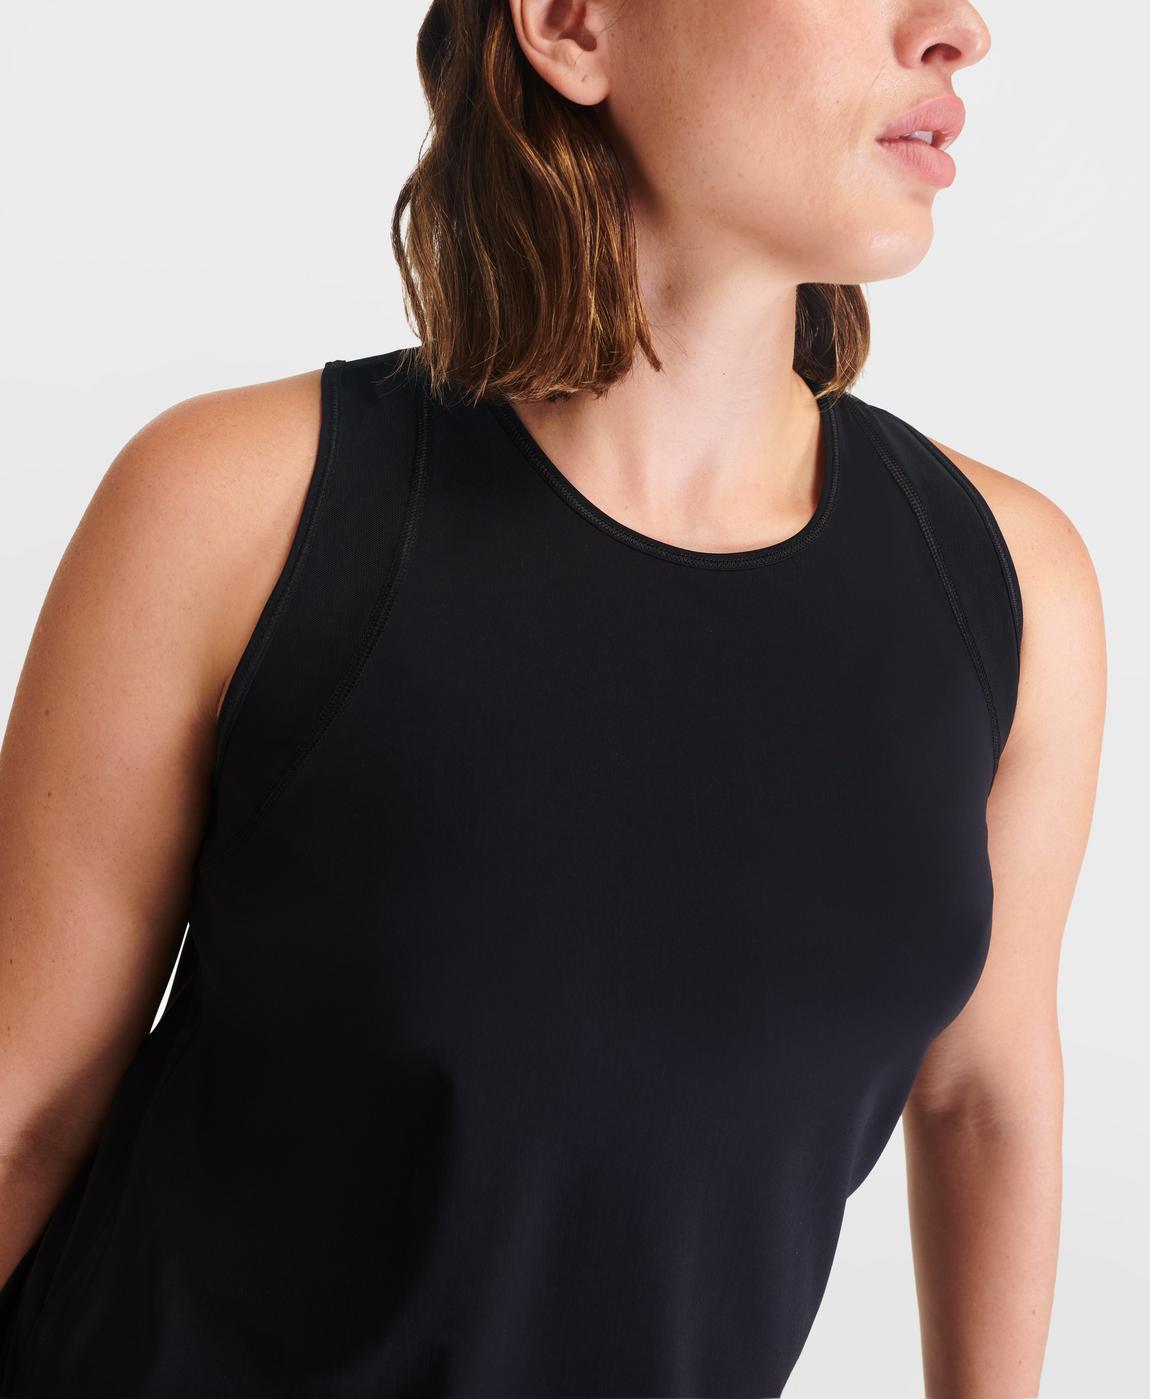 Swifty Workout Tank - Black, Women's Vests